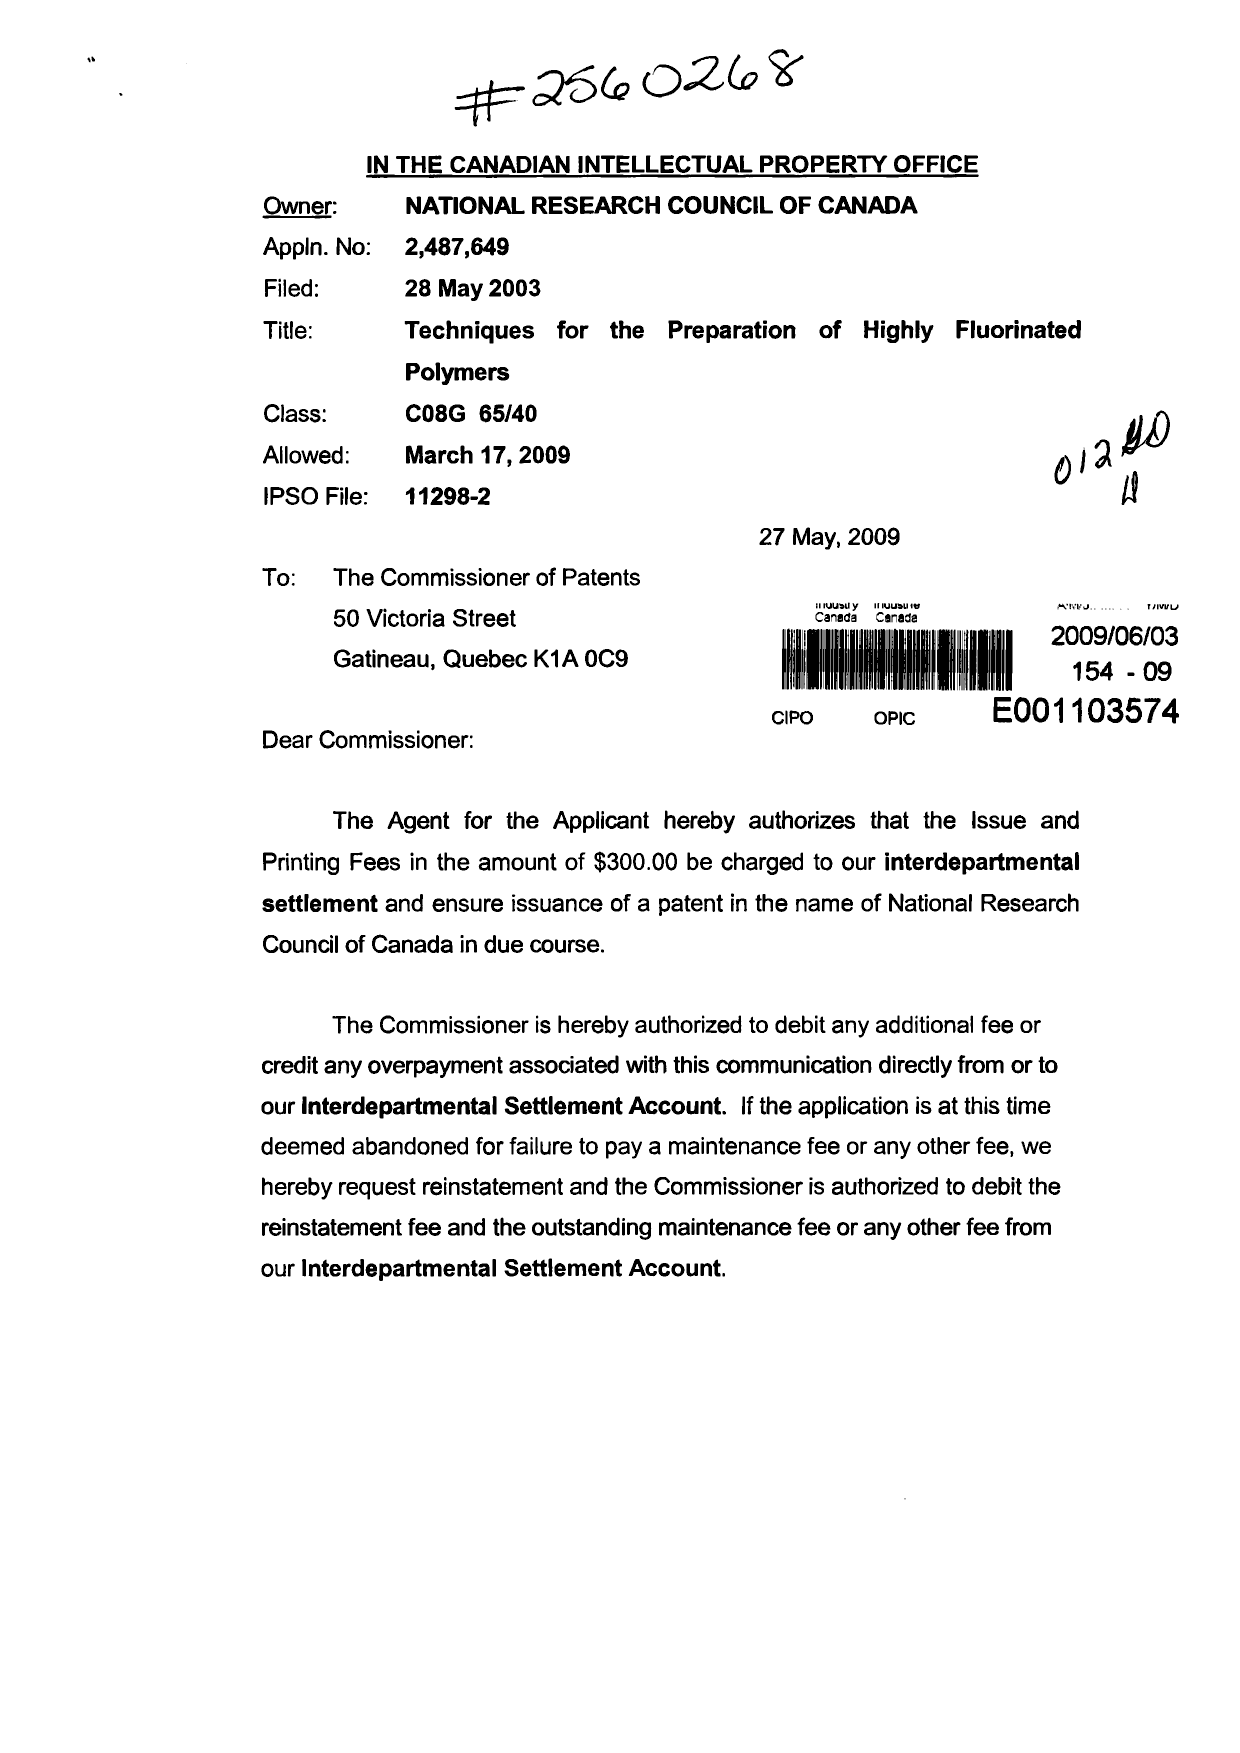 Canadian Patent Document 2487649. Correspondence 20090603. Image 1 of 2